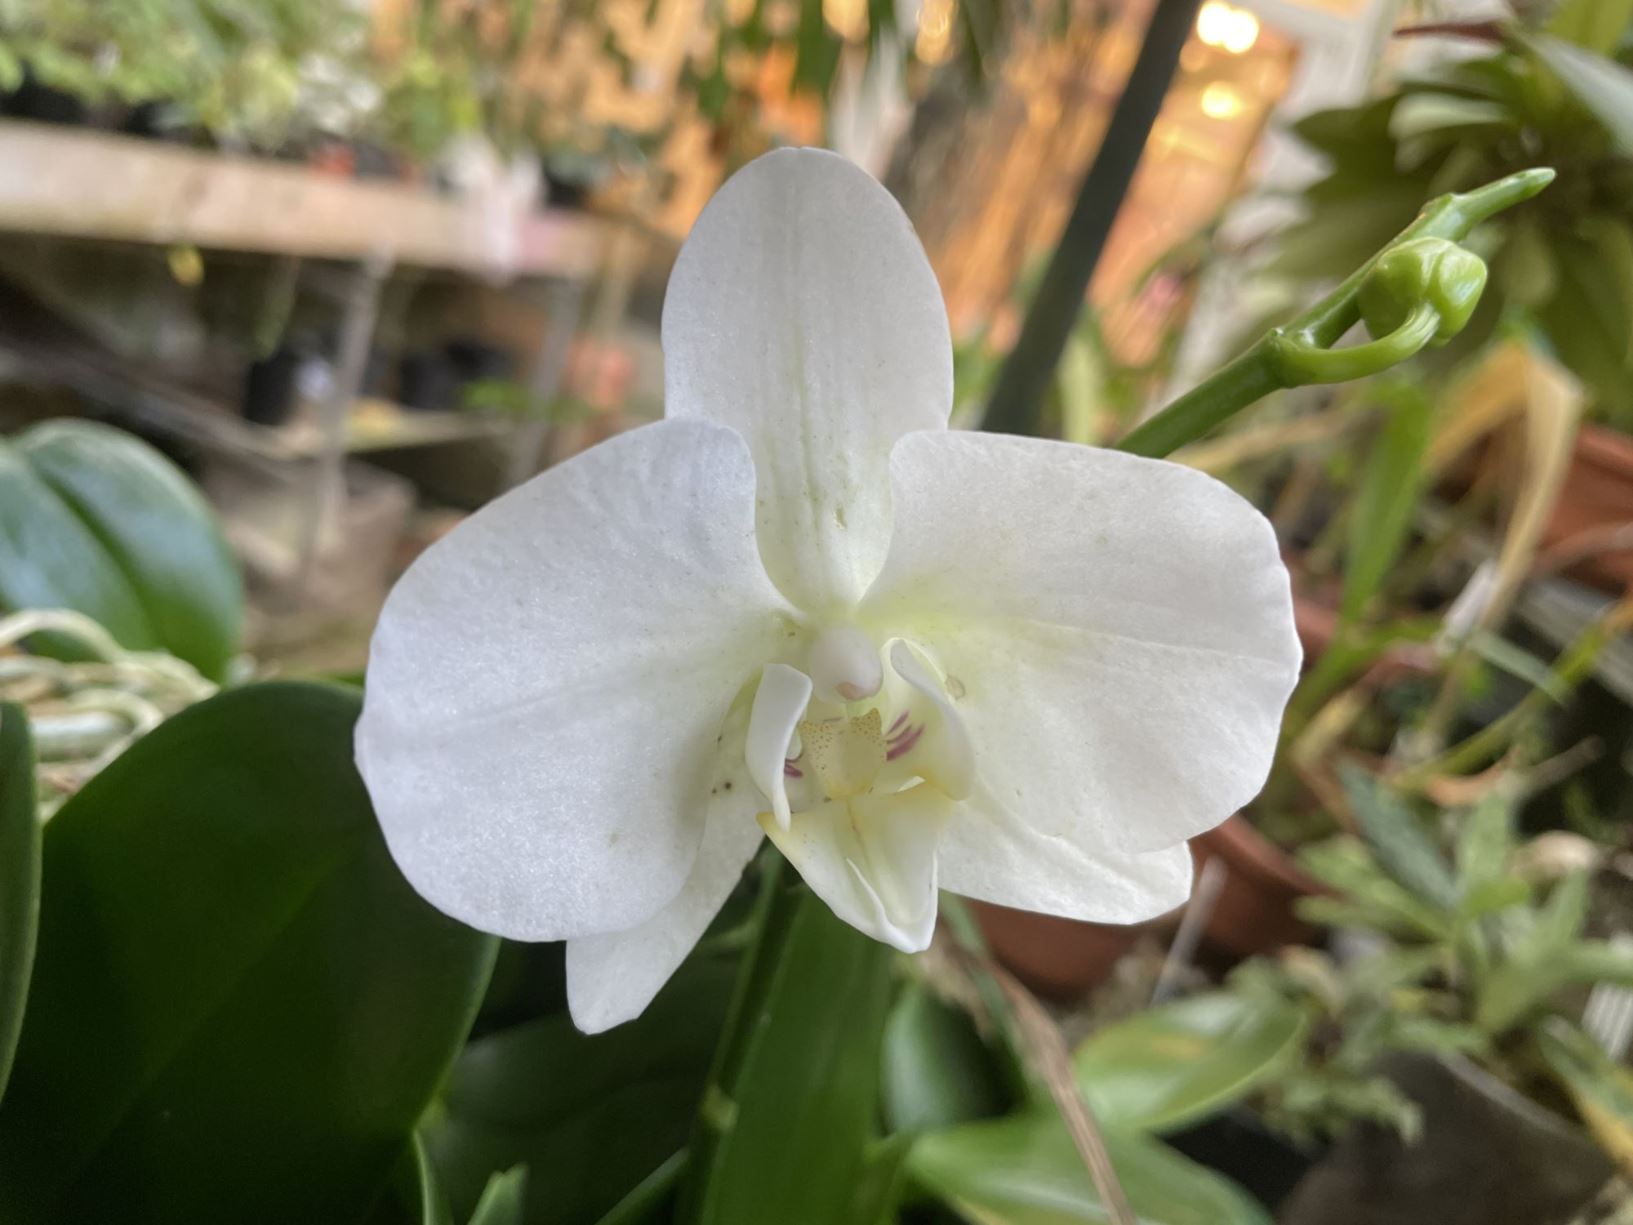 Phalaenopsis aphrodite - Aphrodite's moth orchid